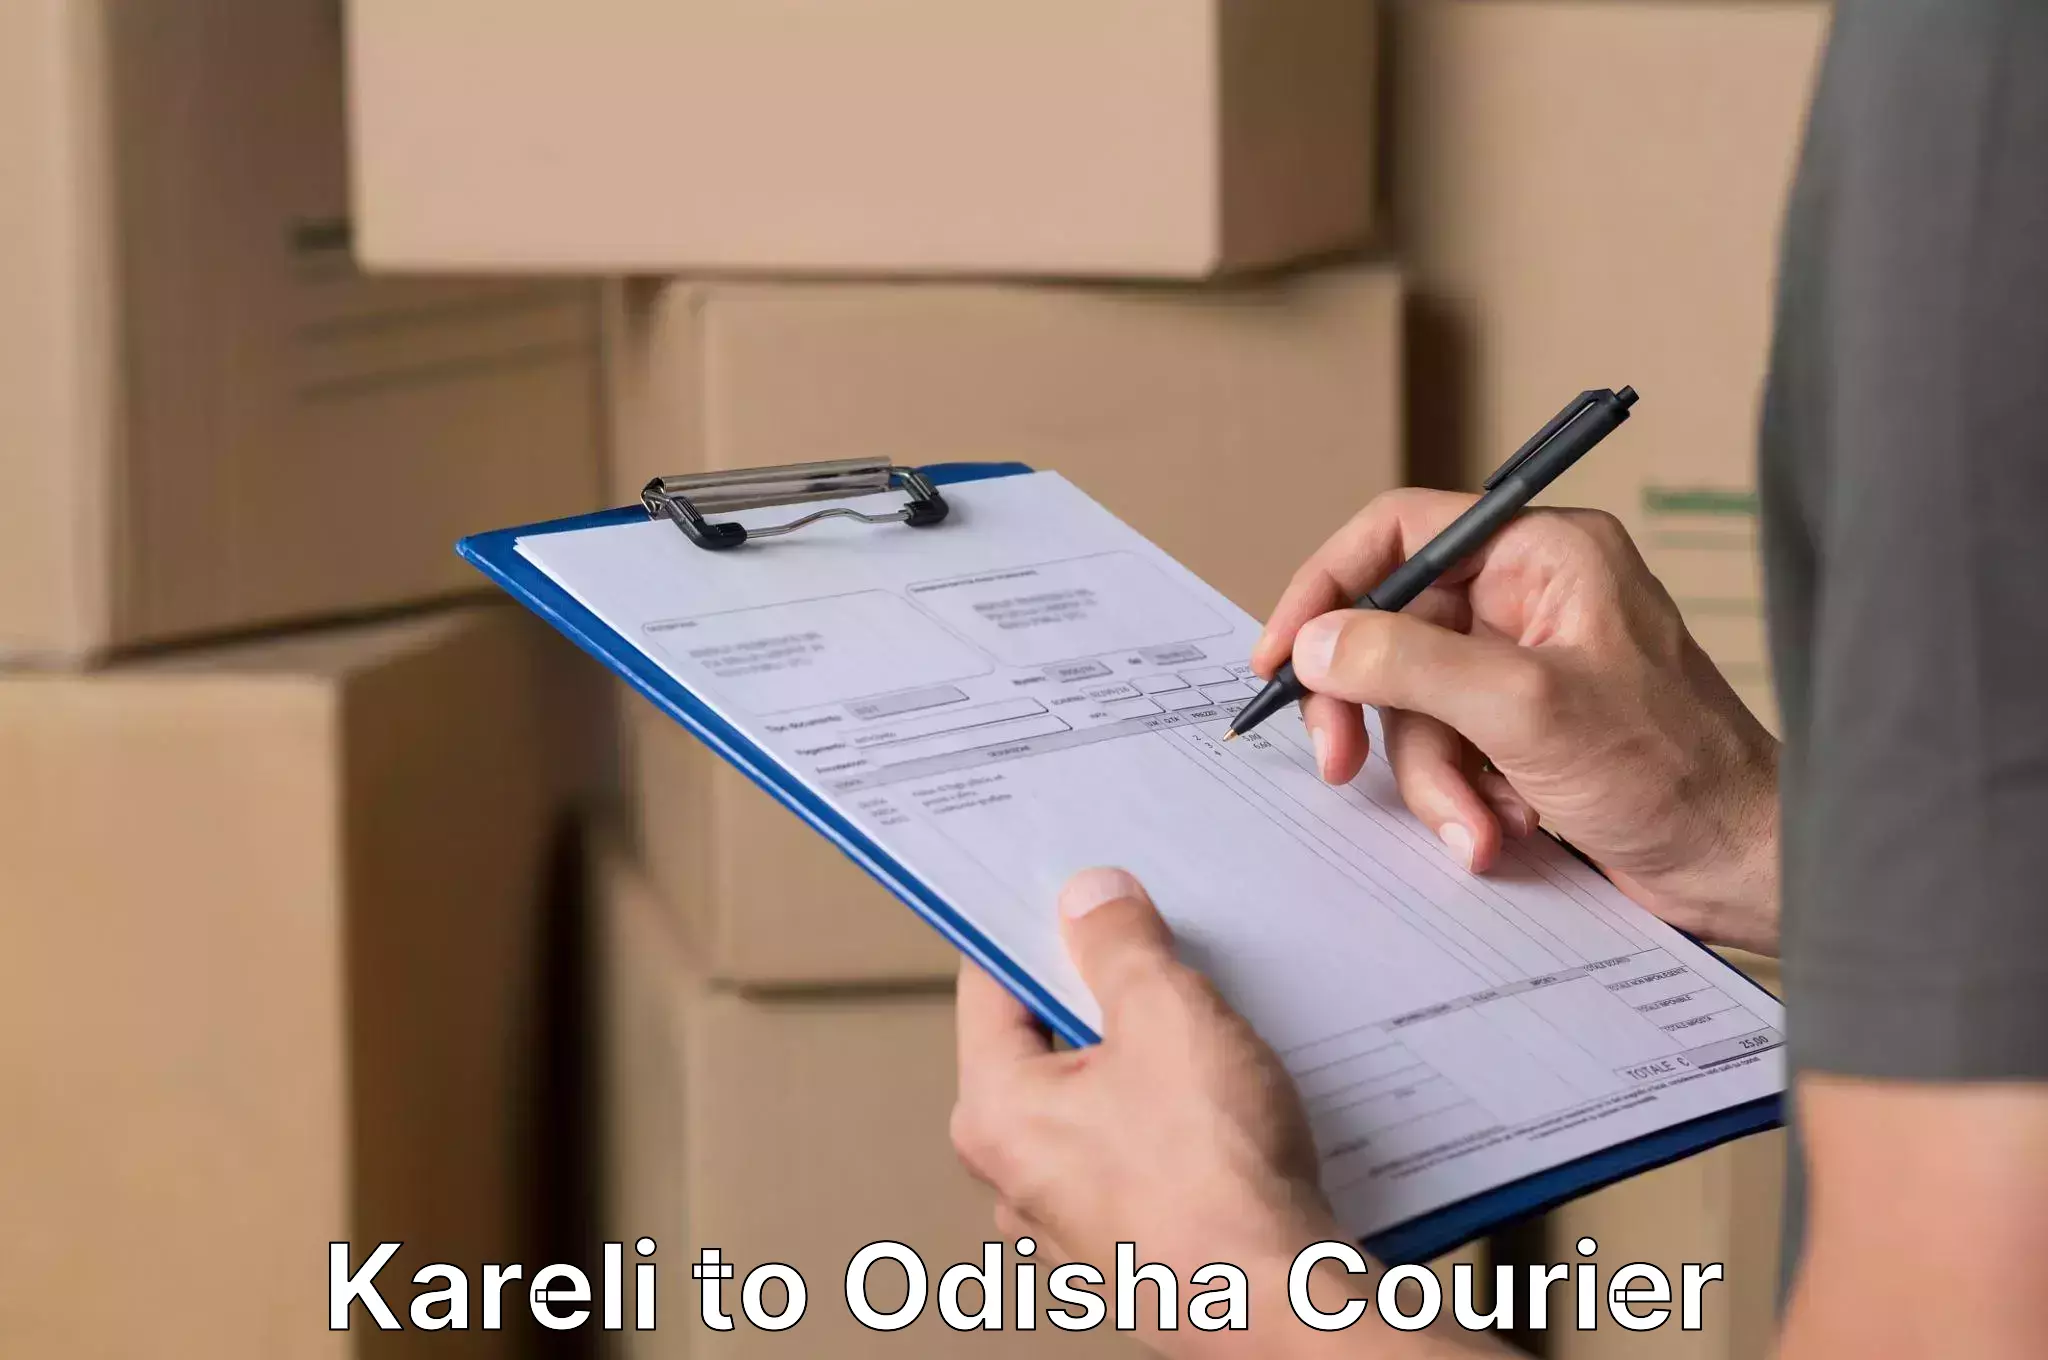 Furniture transport solutions Kareli to Odisha